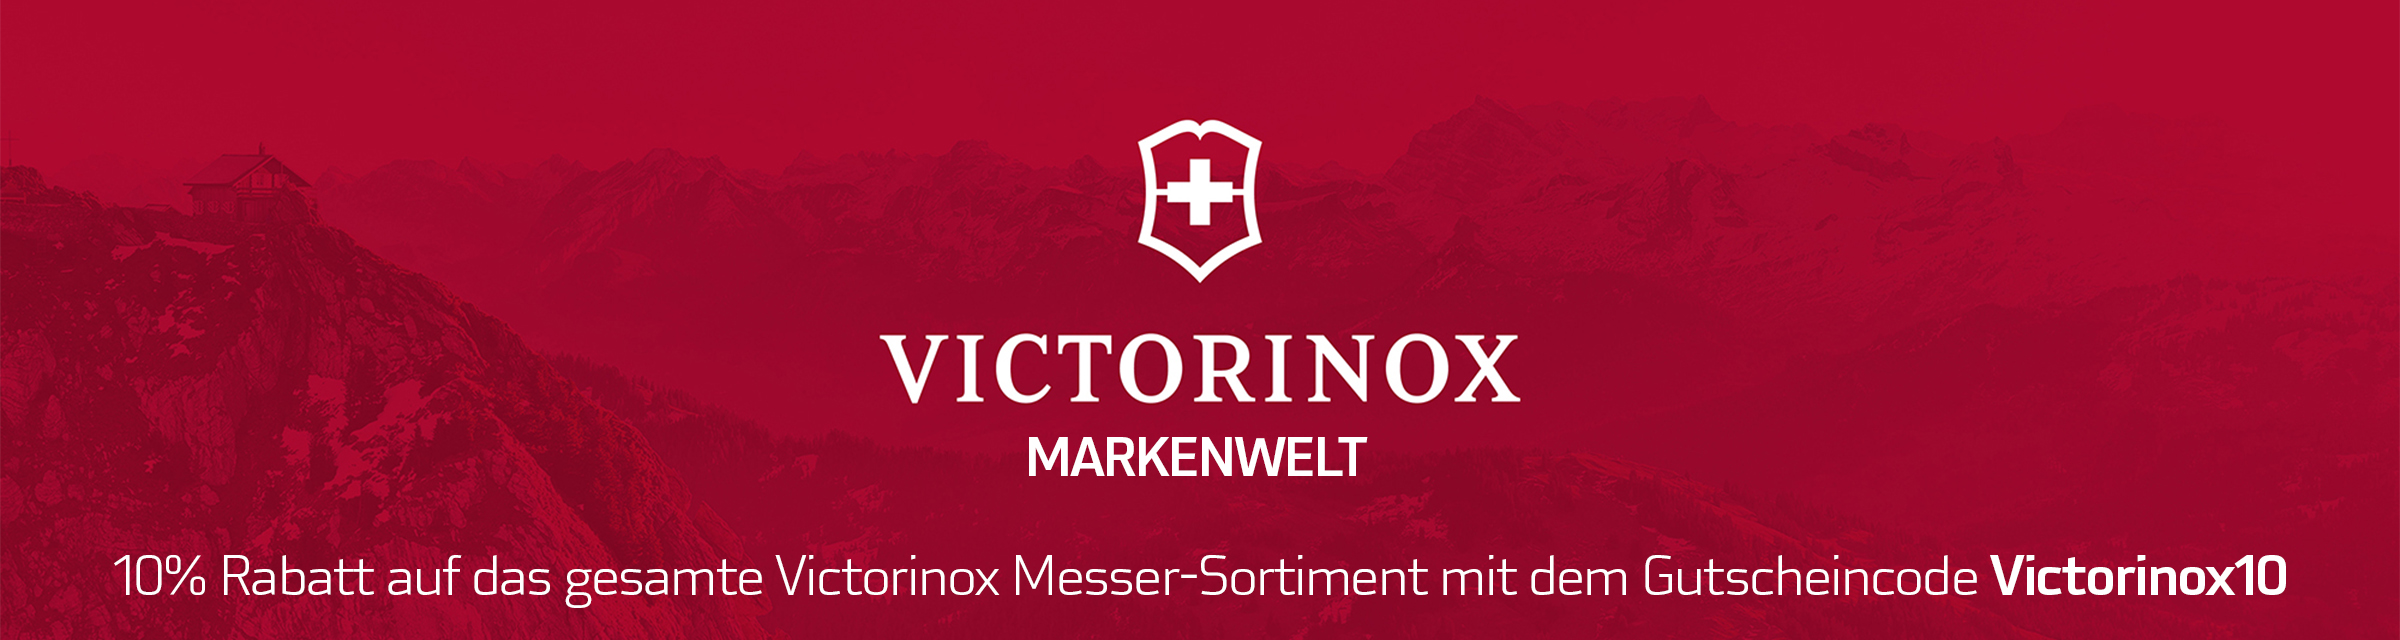 Victorinox Markenshop